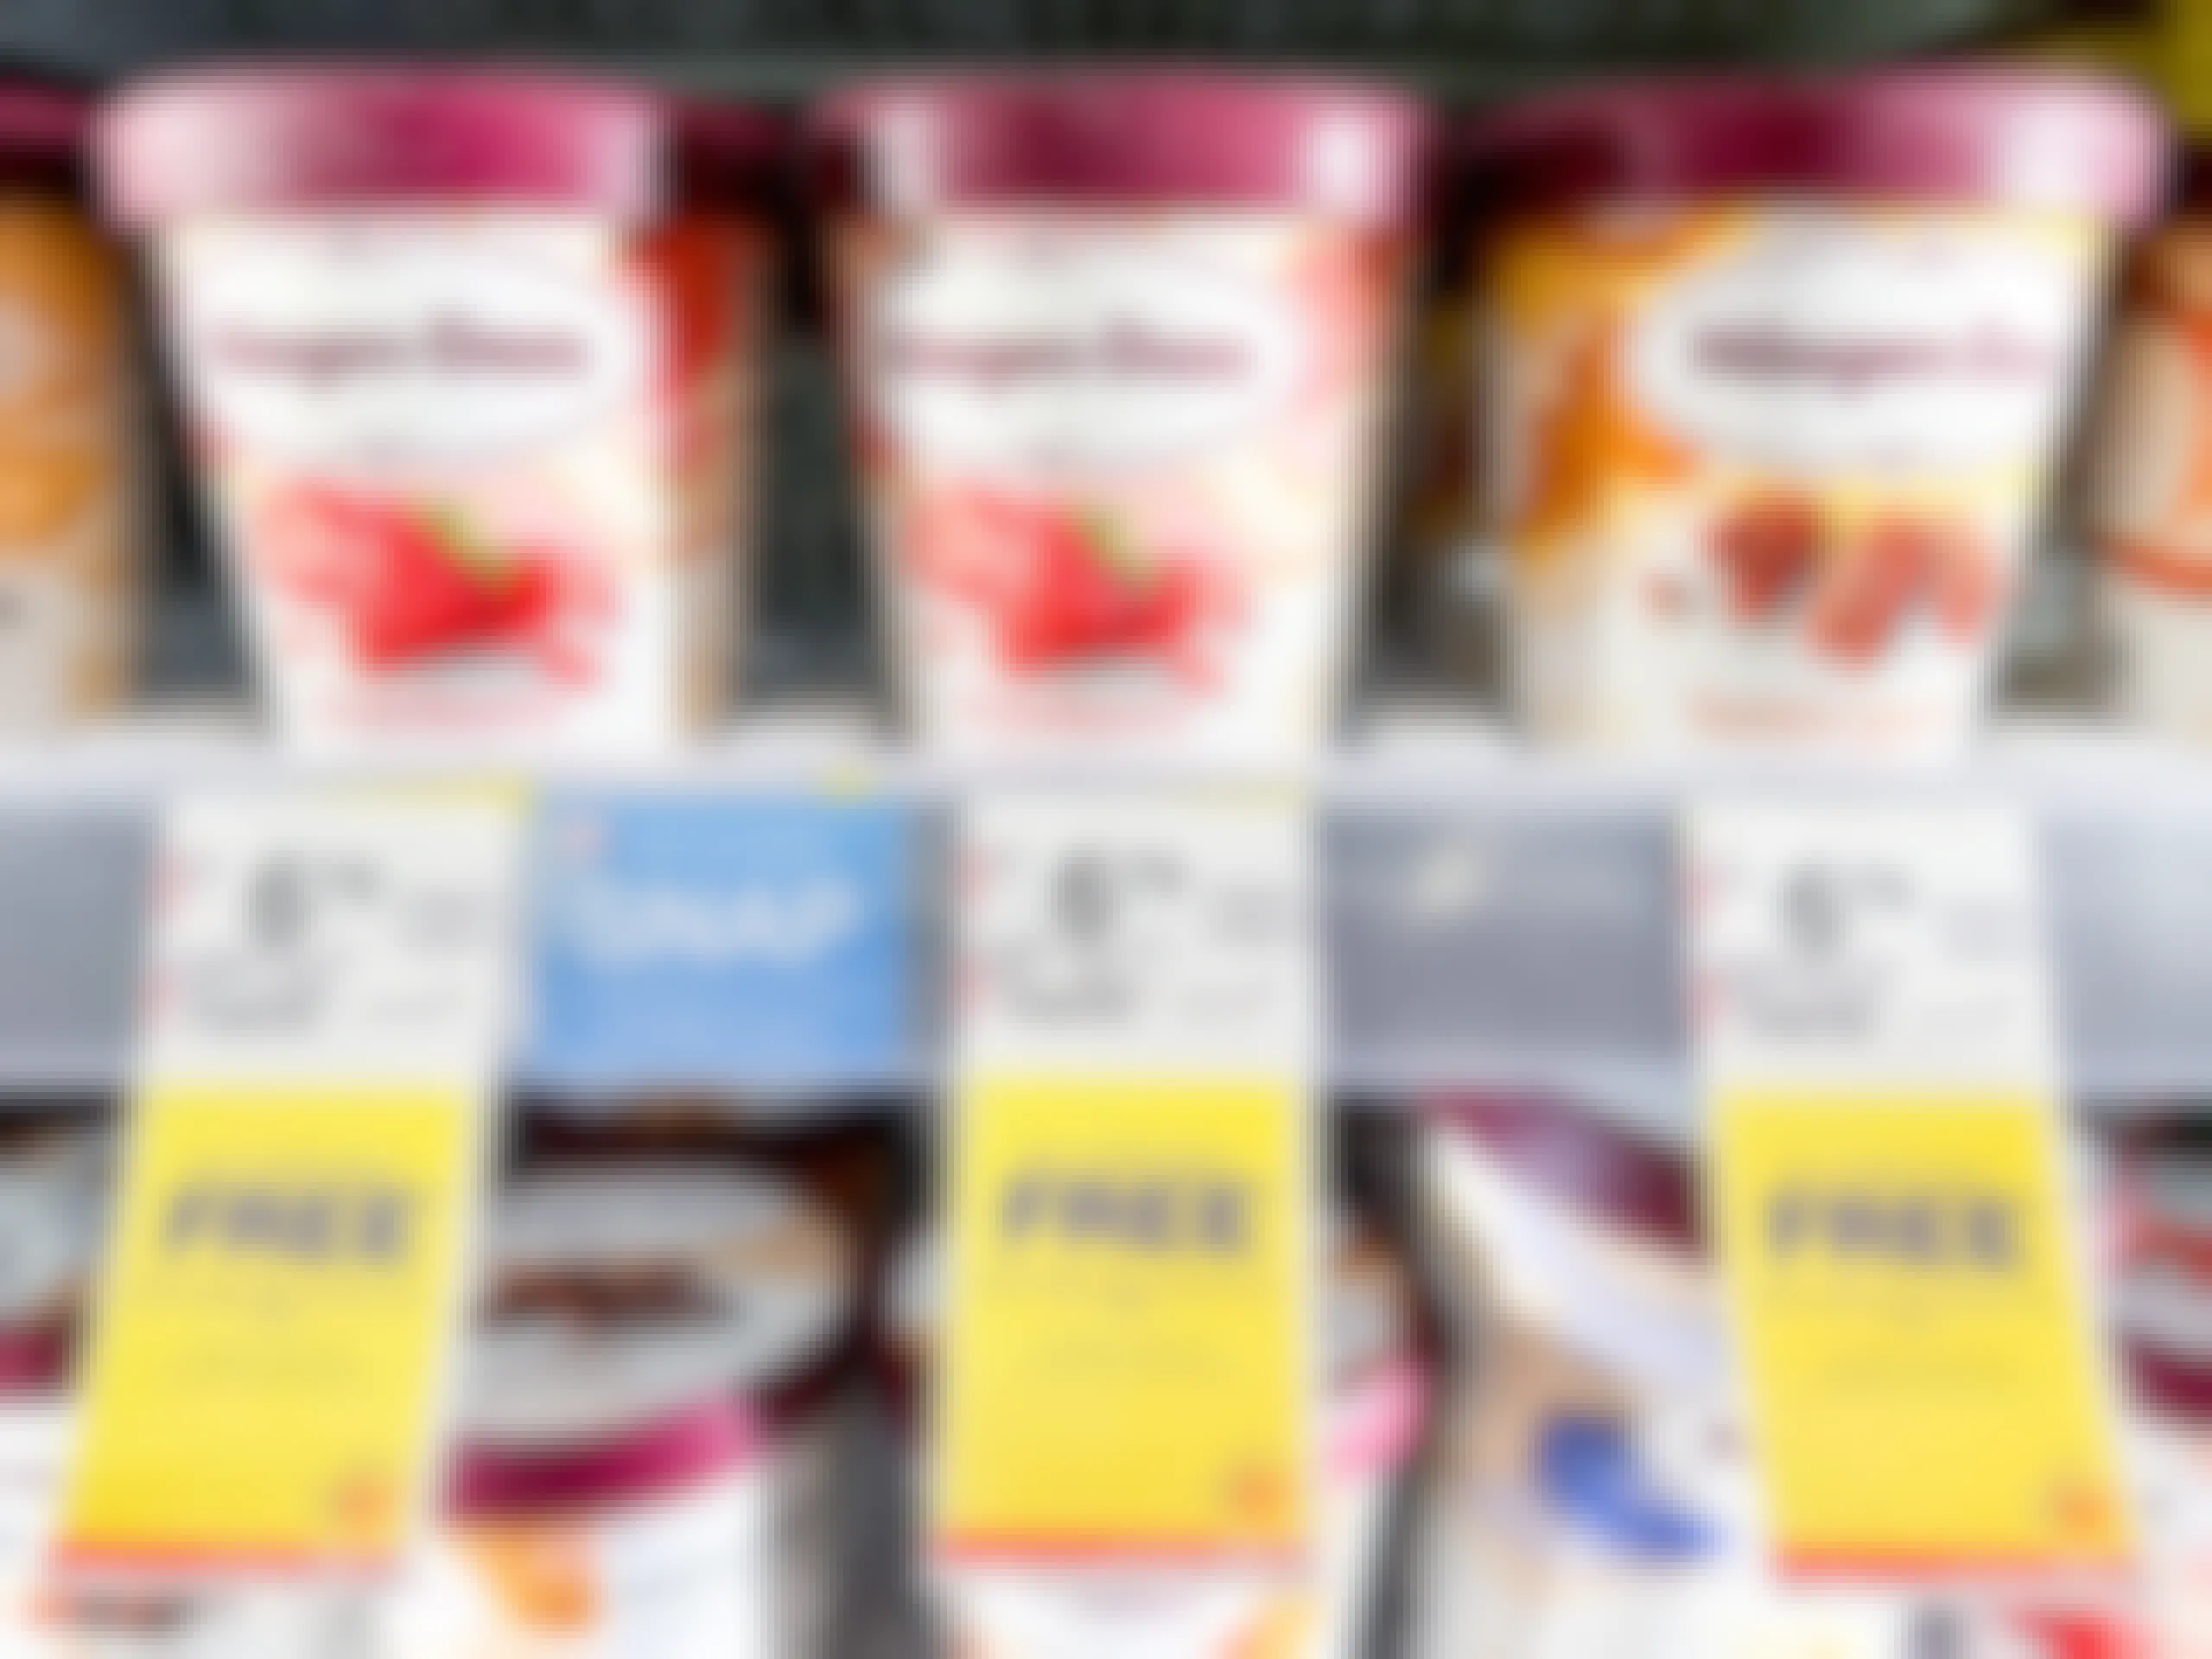 ice cream on shelf above sales tags